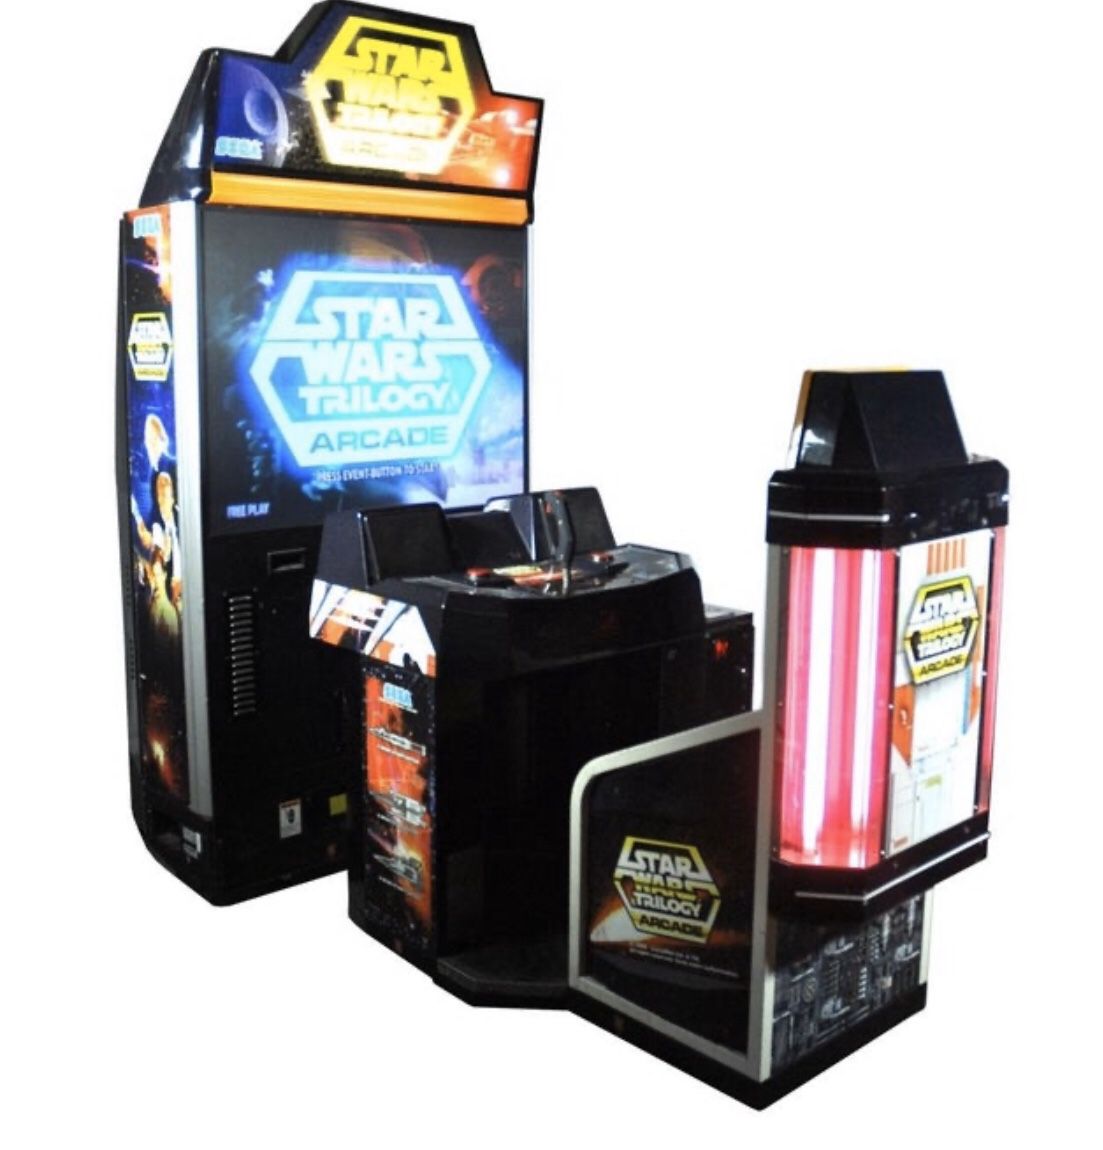 Star Wars trilogy arcade game